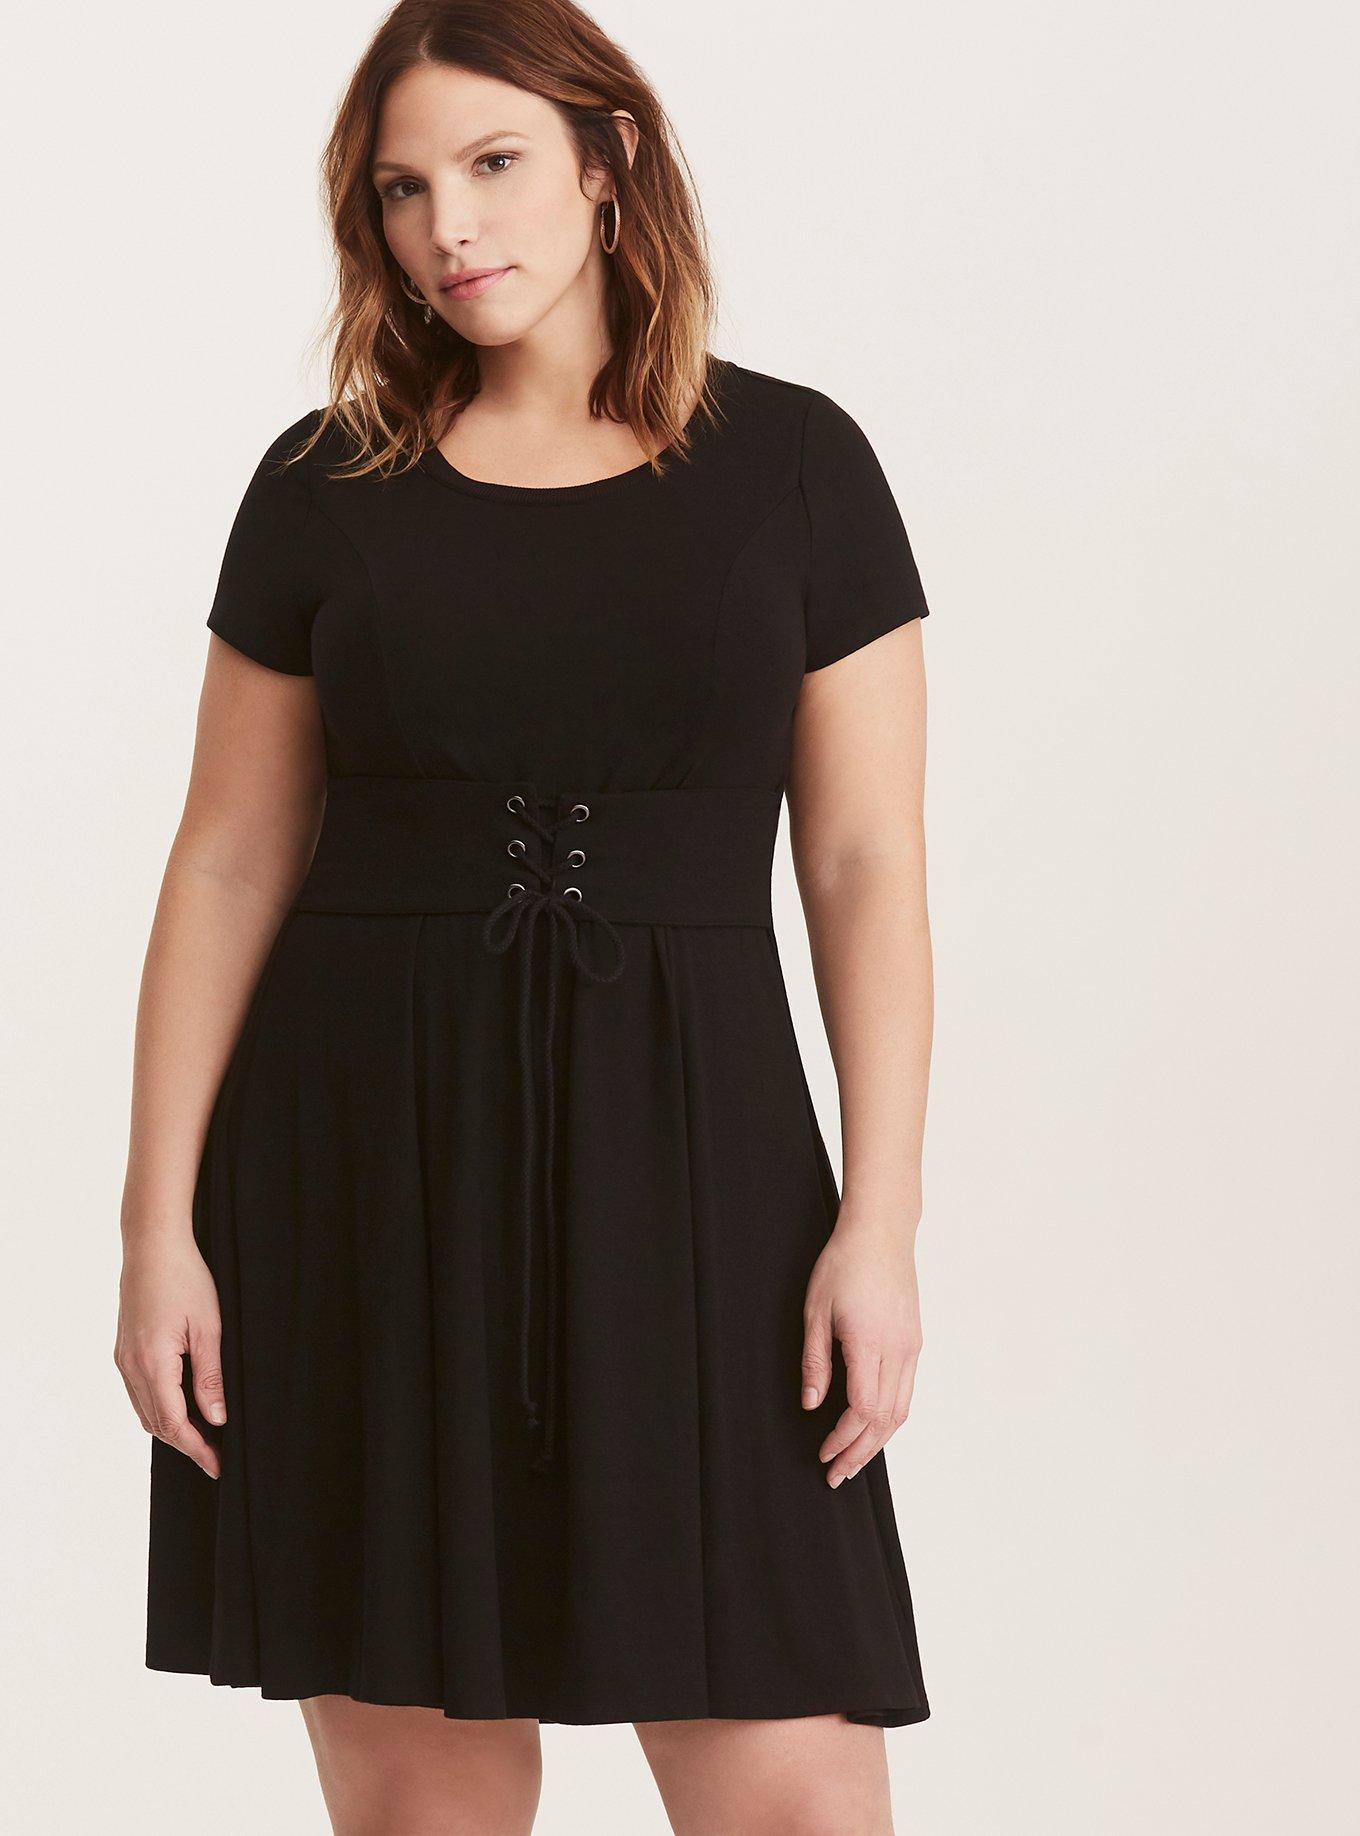 Plus Size - Black Lace Up Corset Jersey Knit Tee Shirt Dress - Torrid